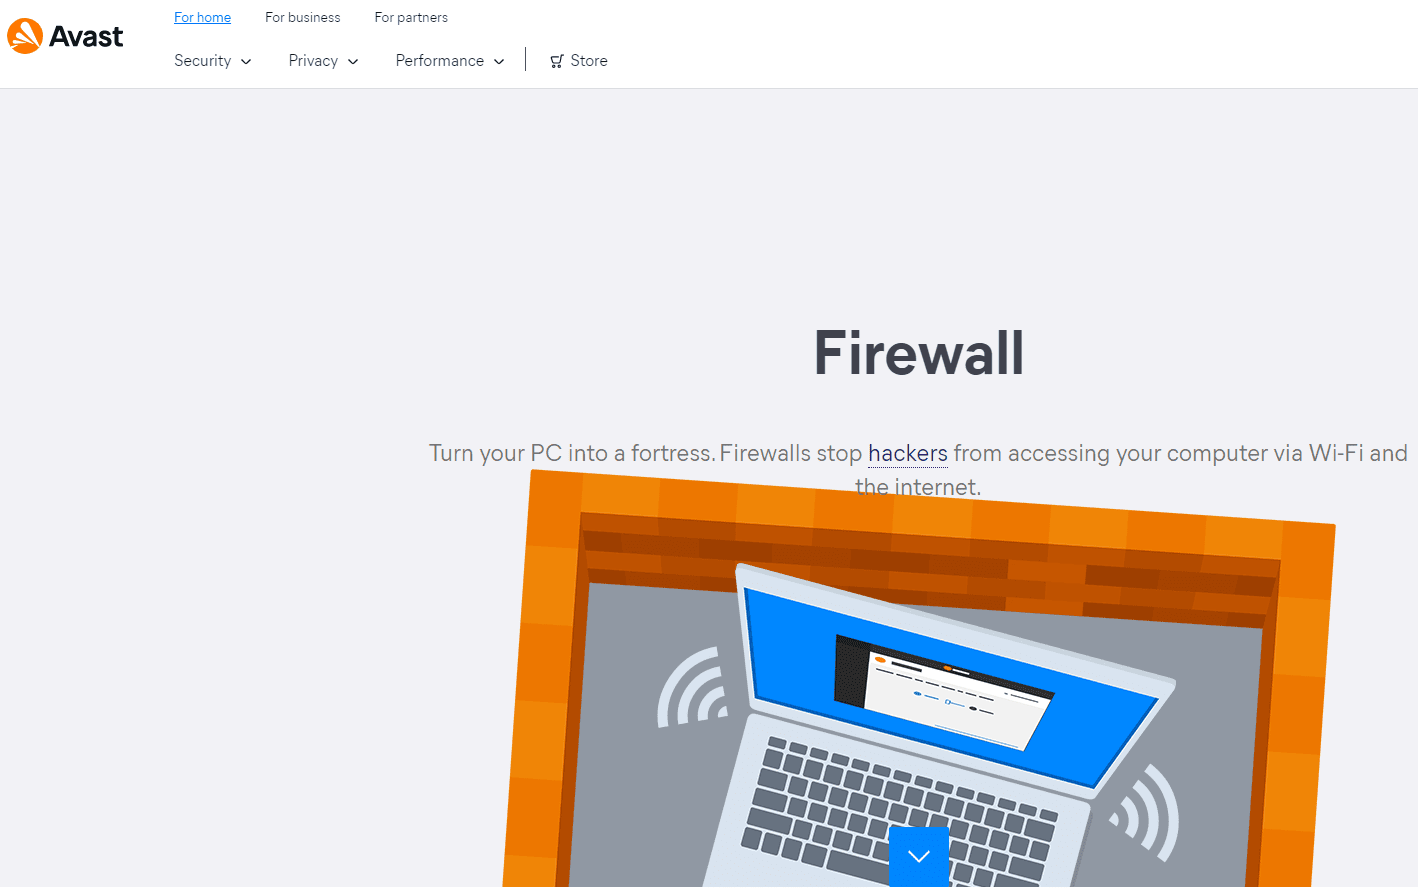 Avast Firewall Protection